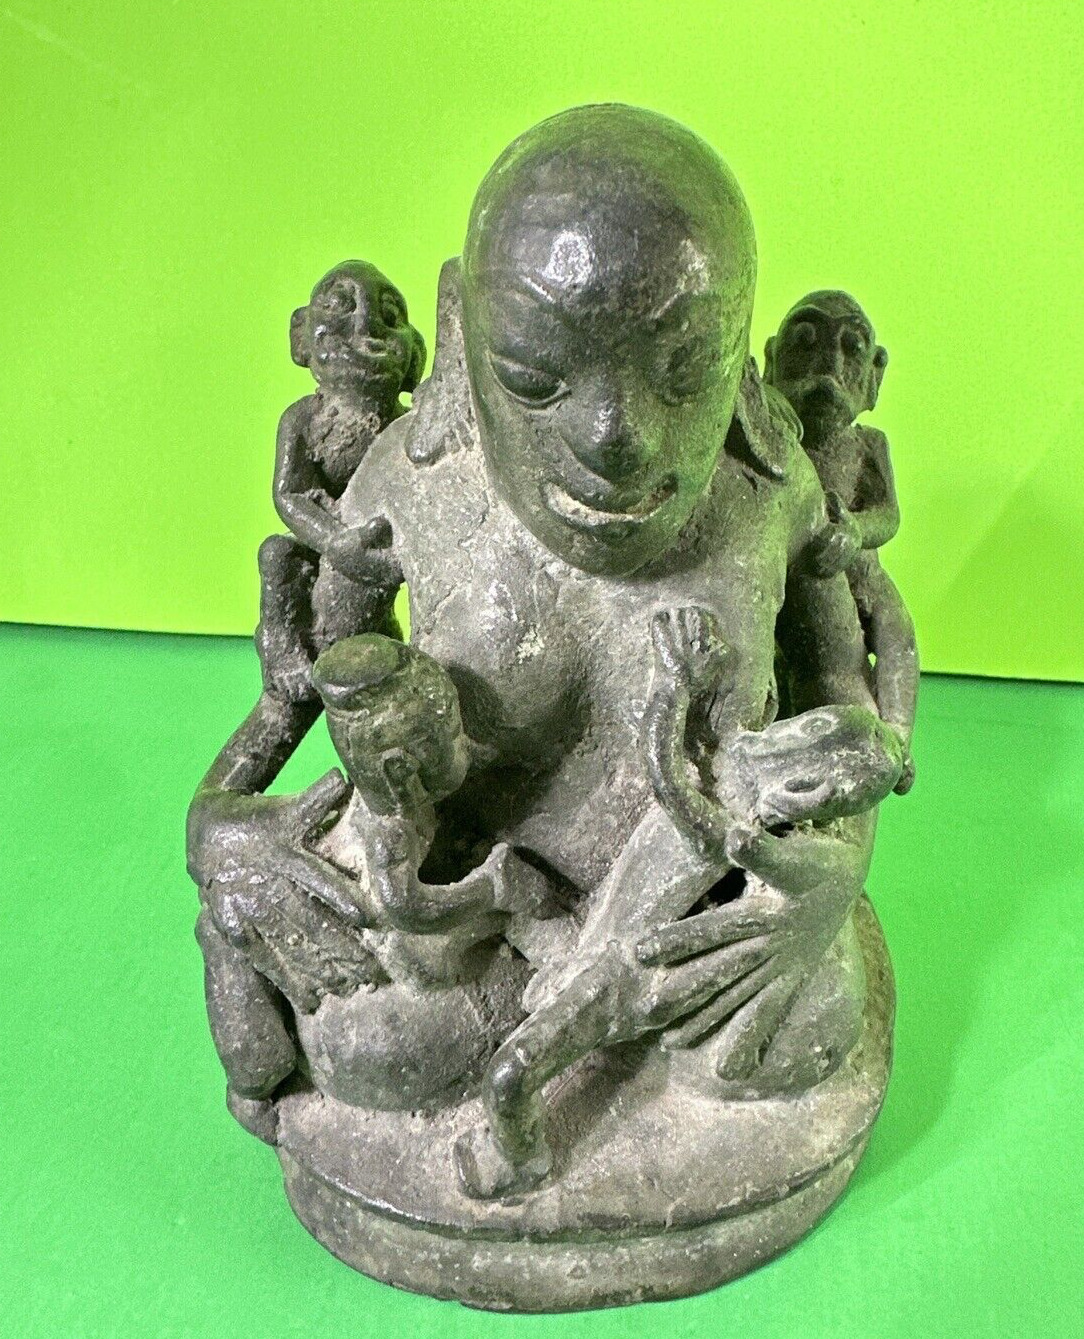 Fertility Figurine Woman with children  - Vintage Cast Bronze - Very old